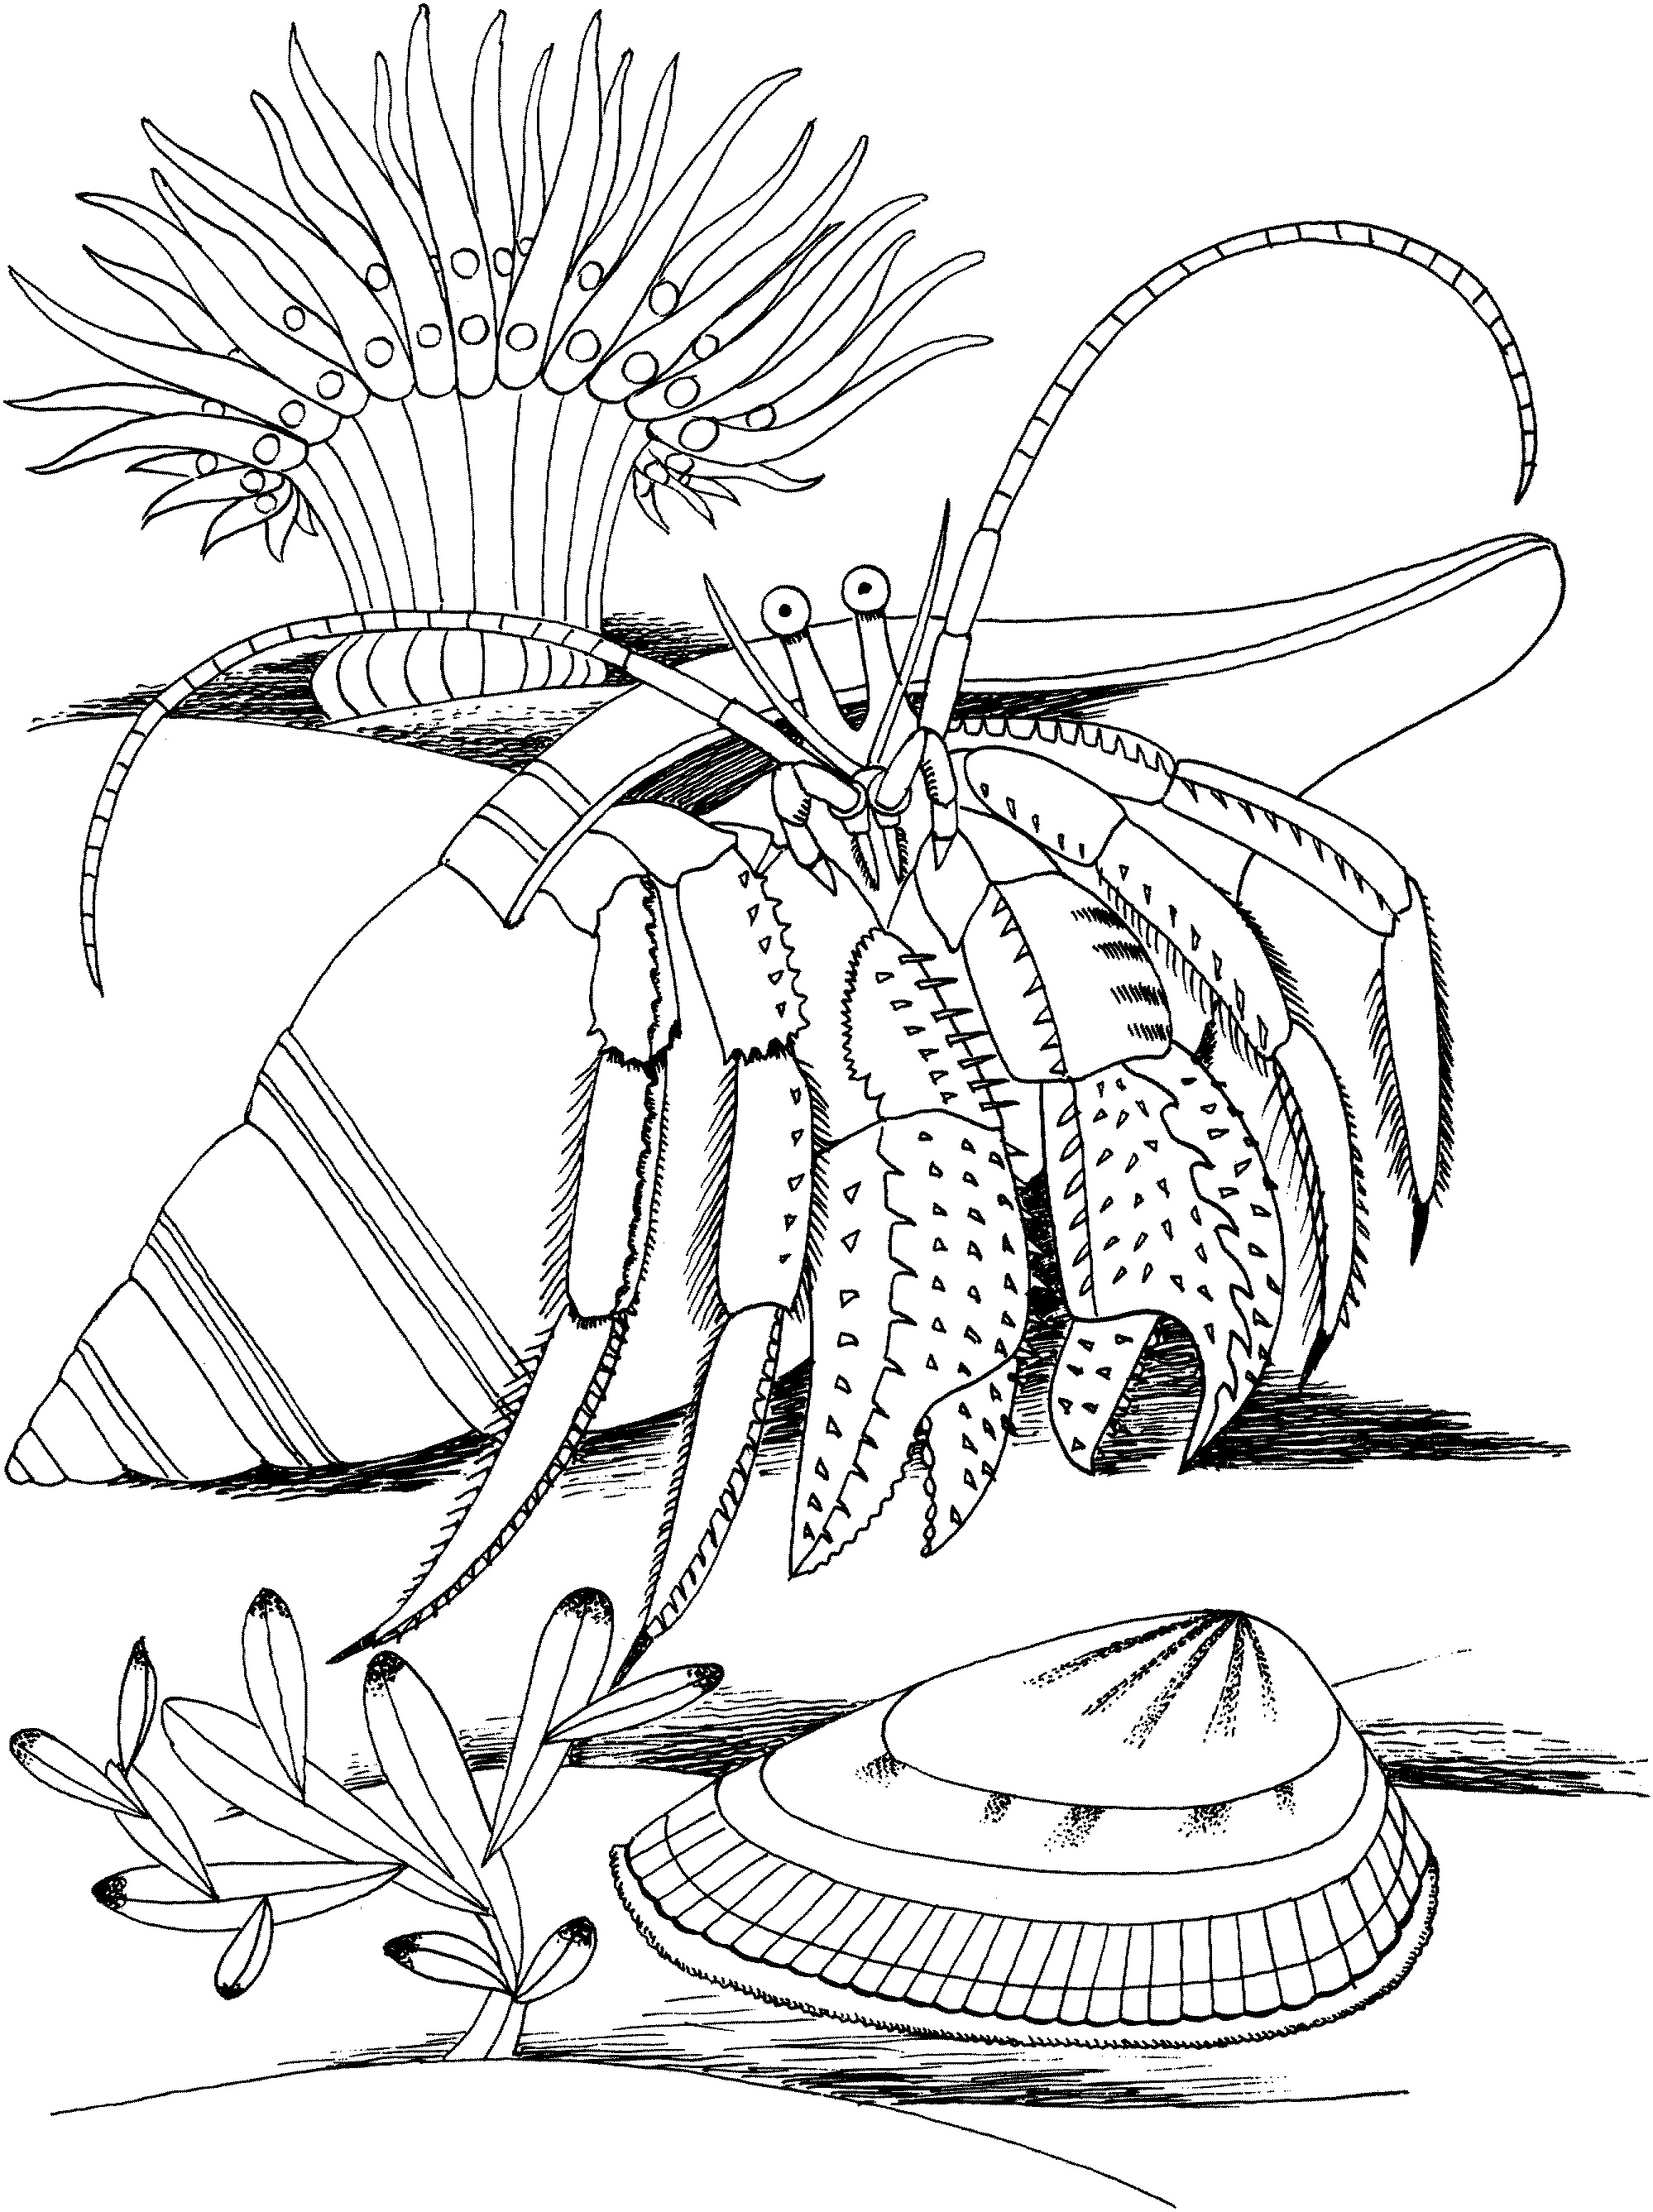 Crab Spider coloring #3, Download drawings